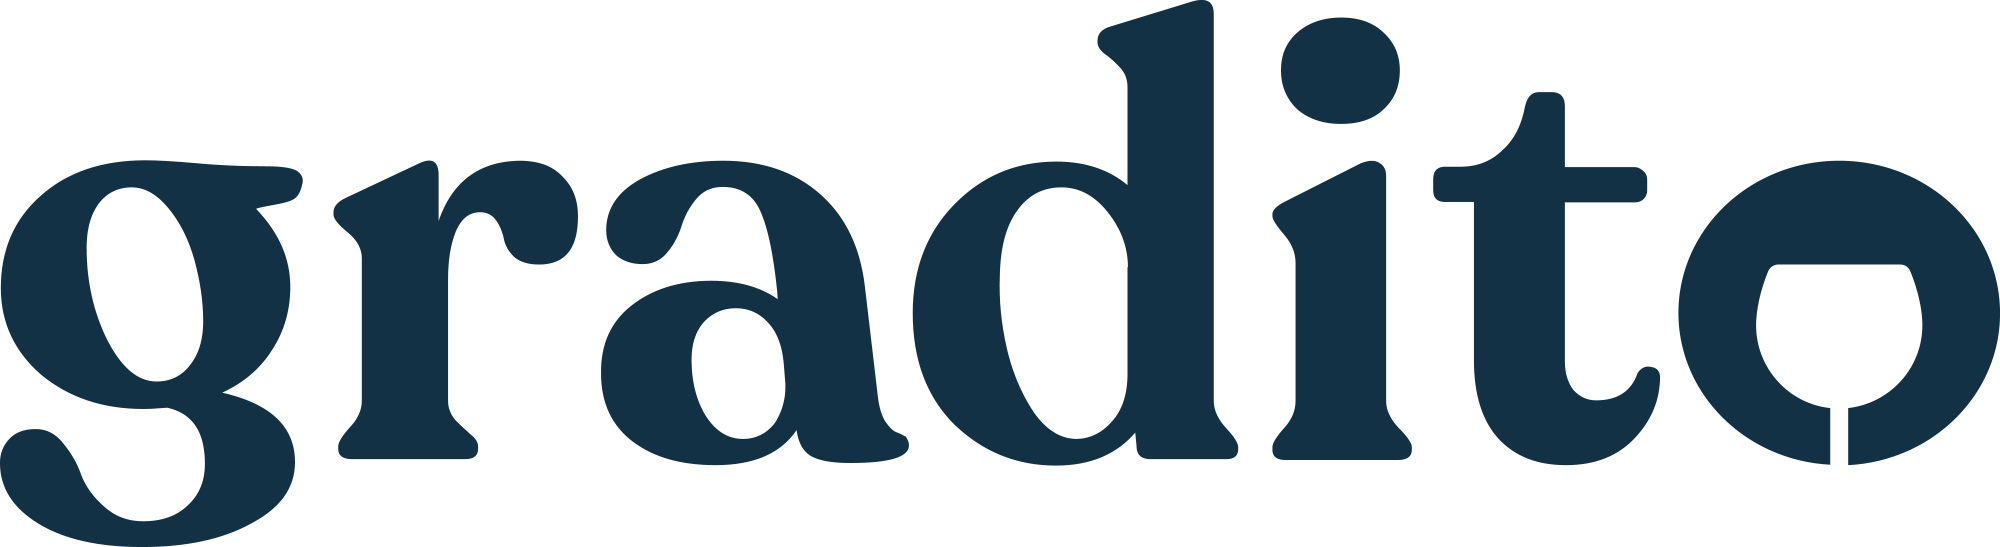 Gradito Logo